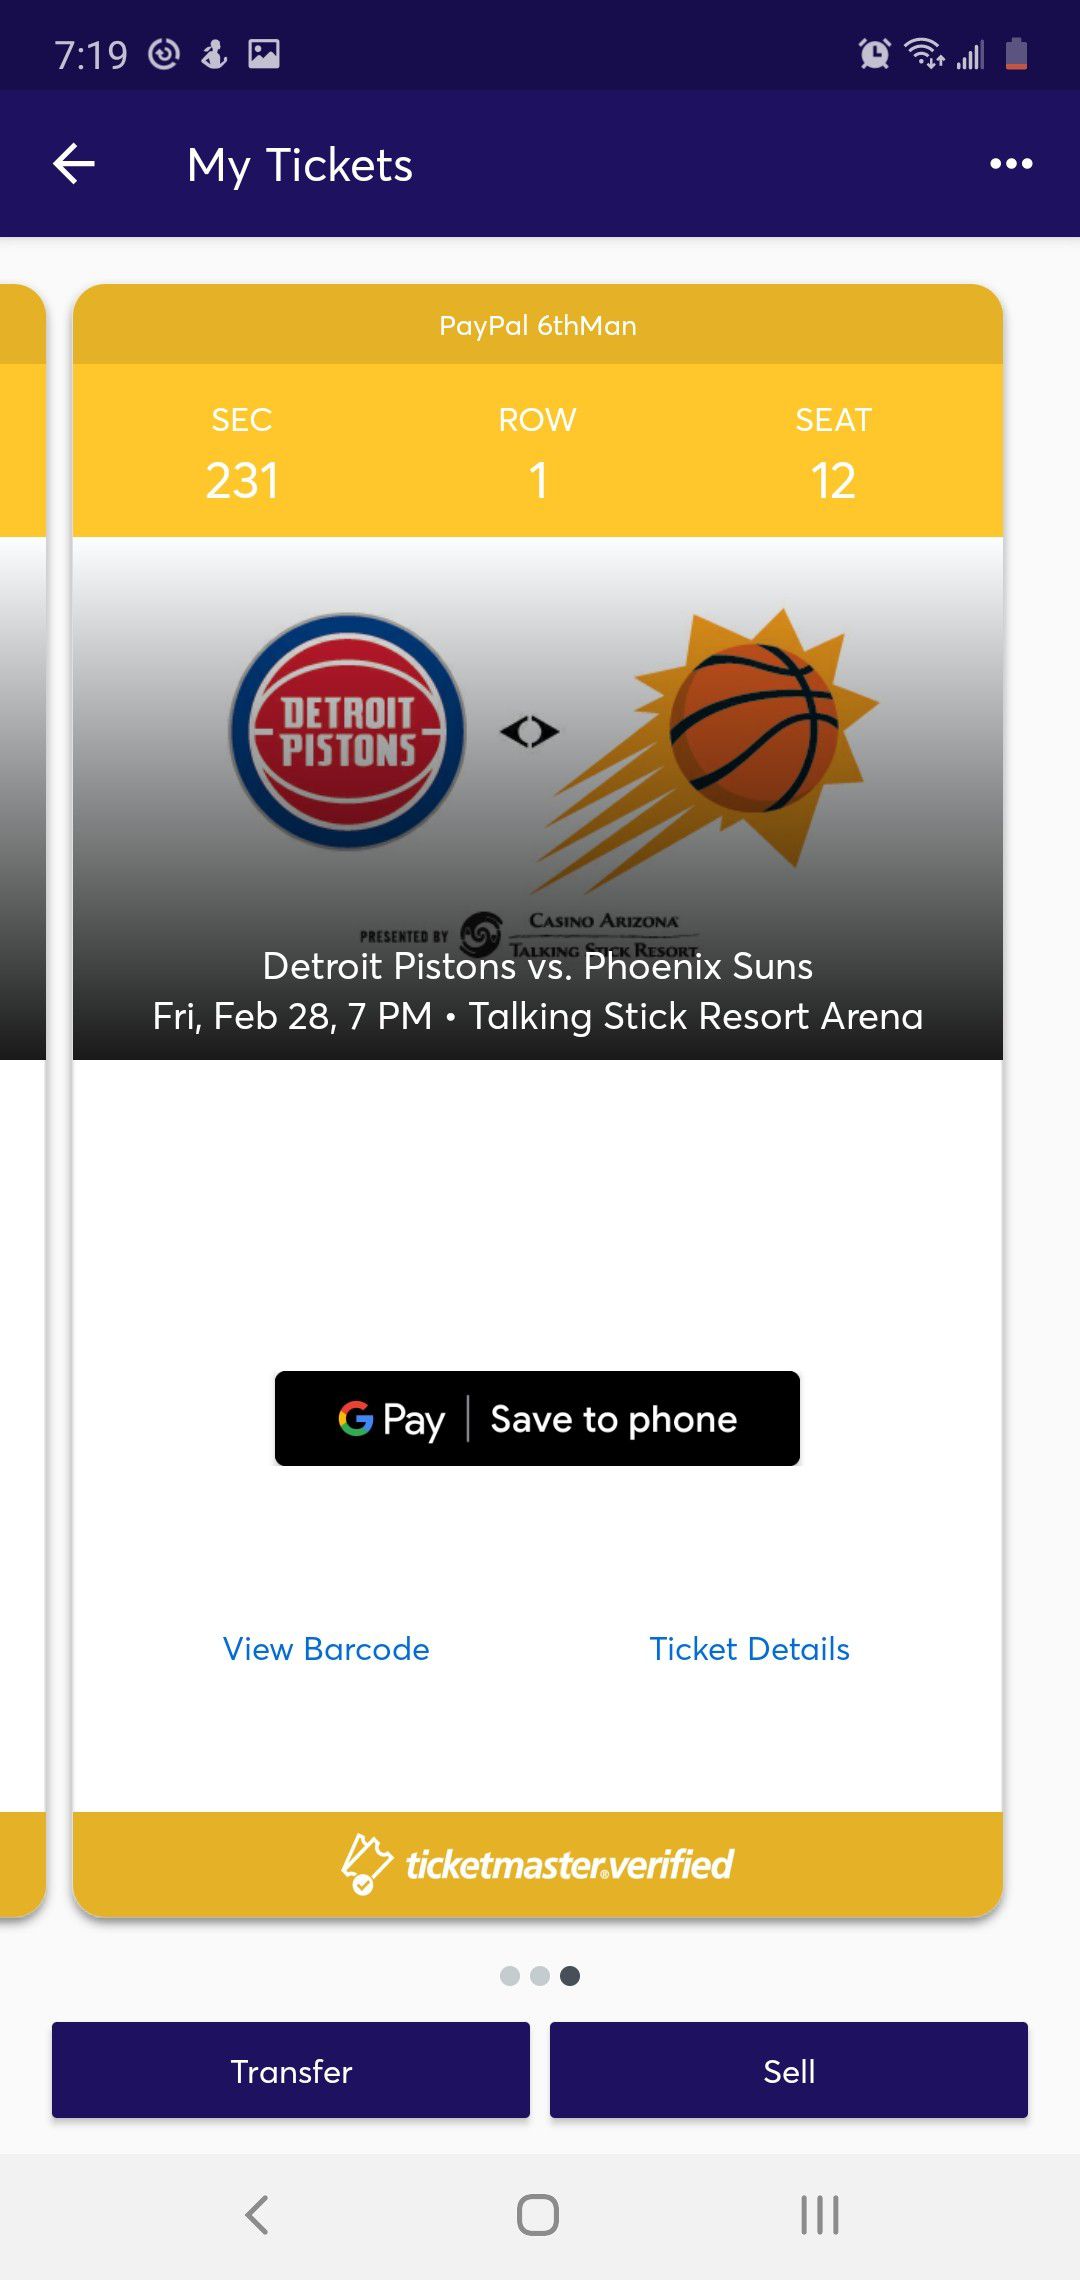 Suns vs Pistons